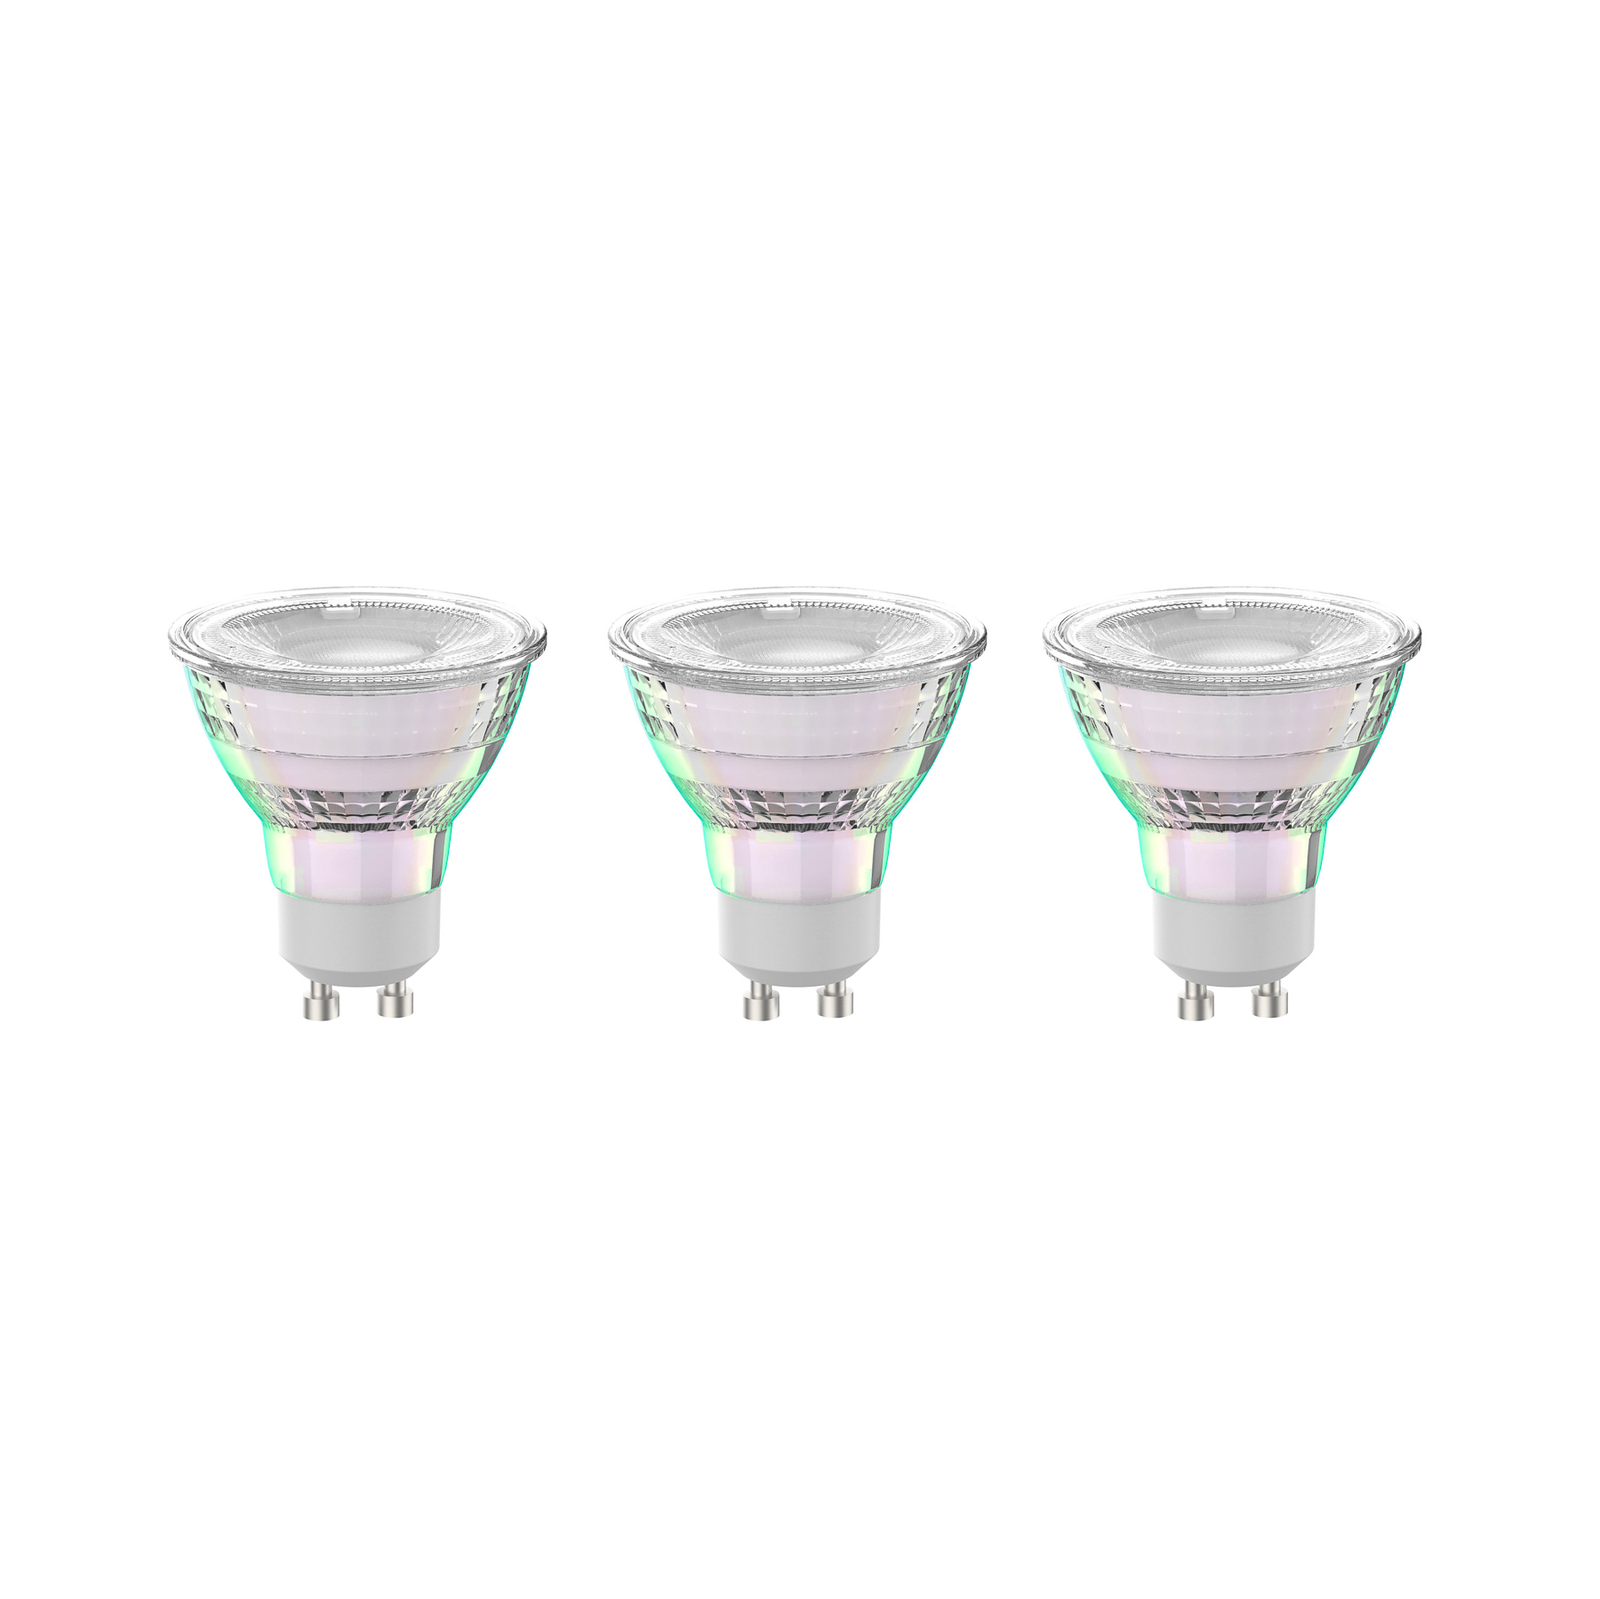 Arcchio LED GU10 2,5W 6500K 450lm vetro set di 3 lampadine